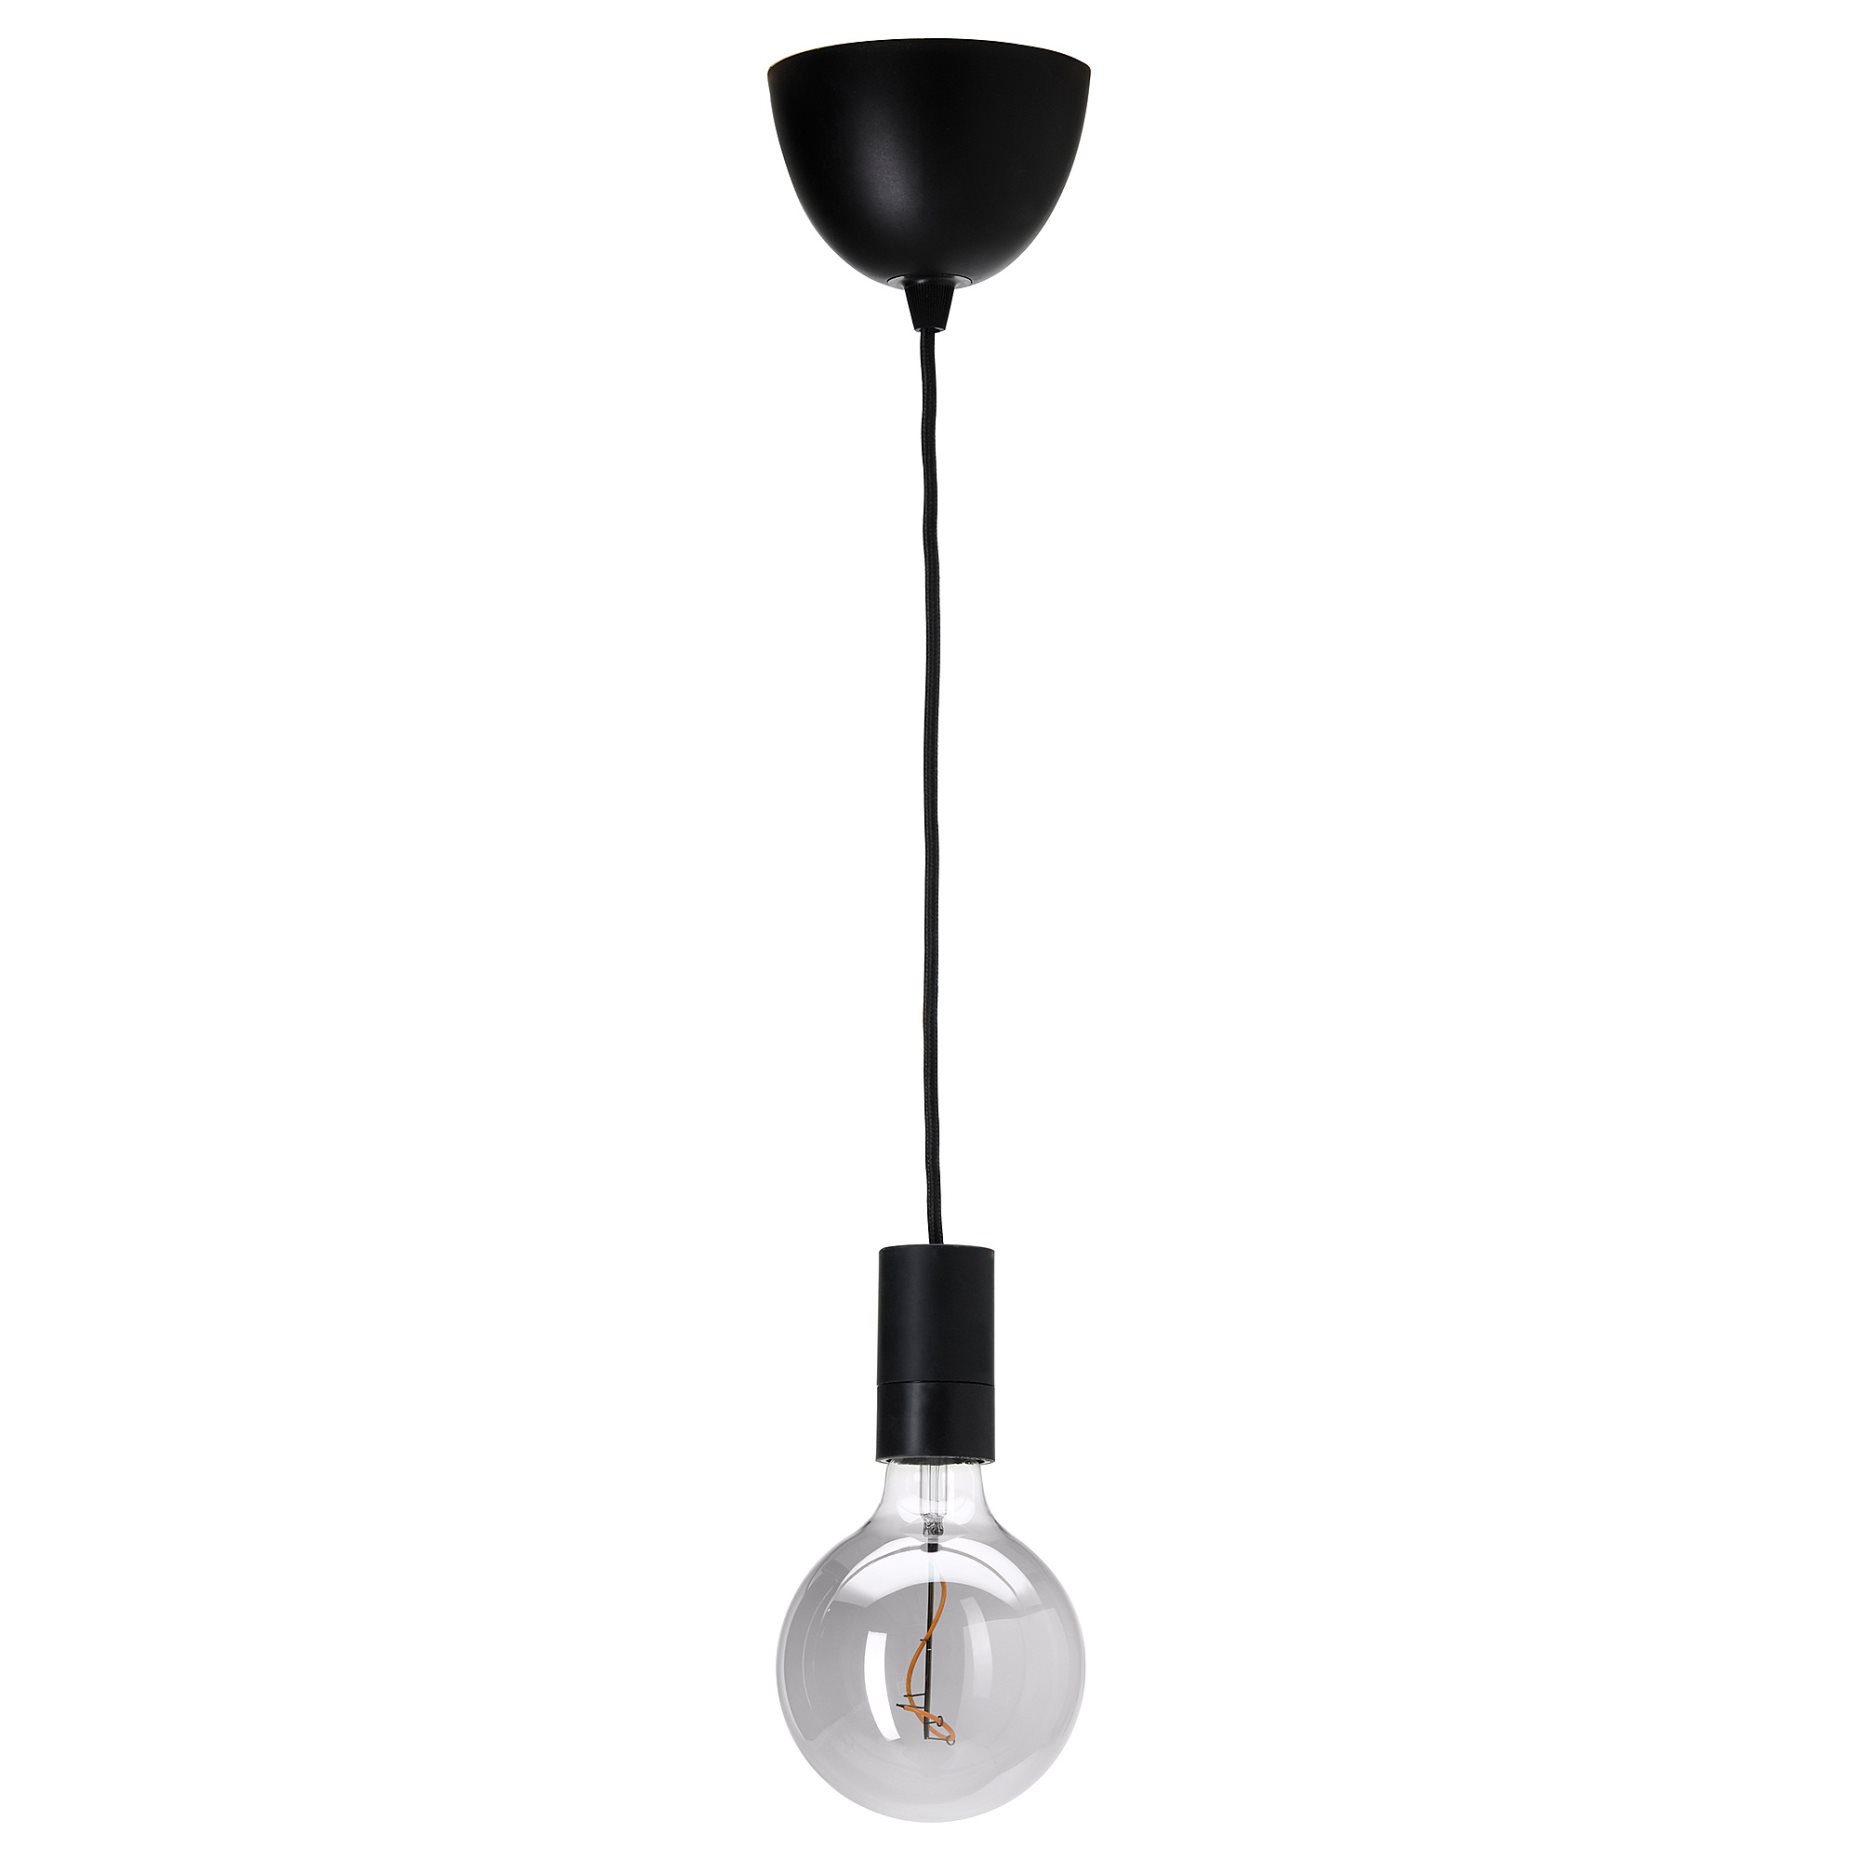 SUNNEBY/MOLNART, pendant lamp with light bulb, 125 mm, 194.783.13